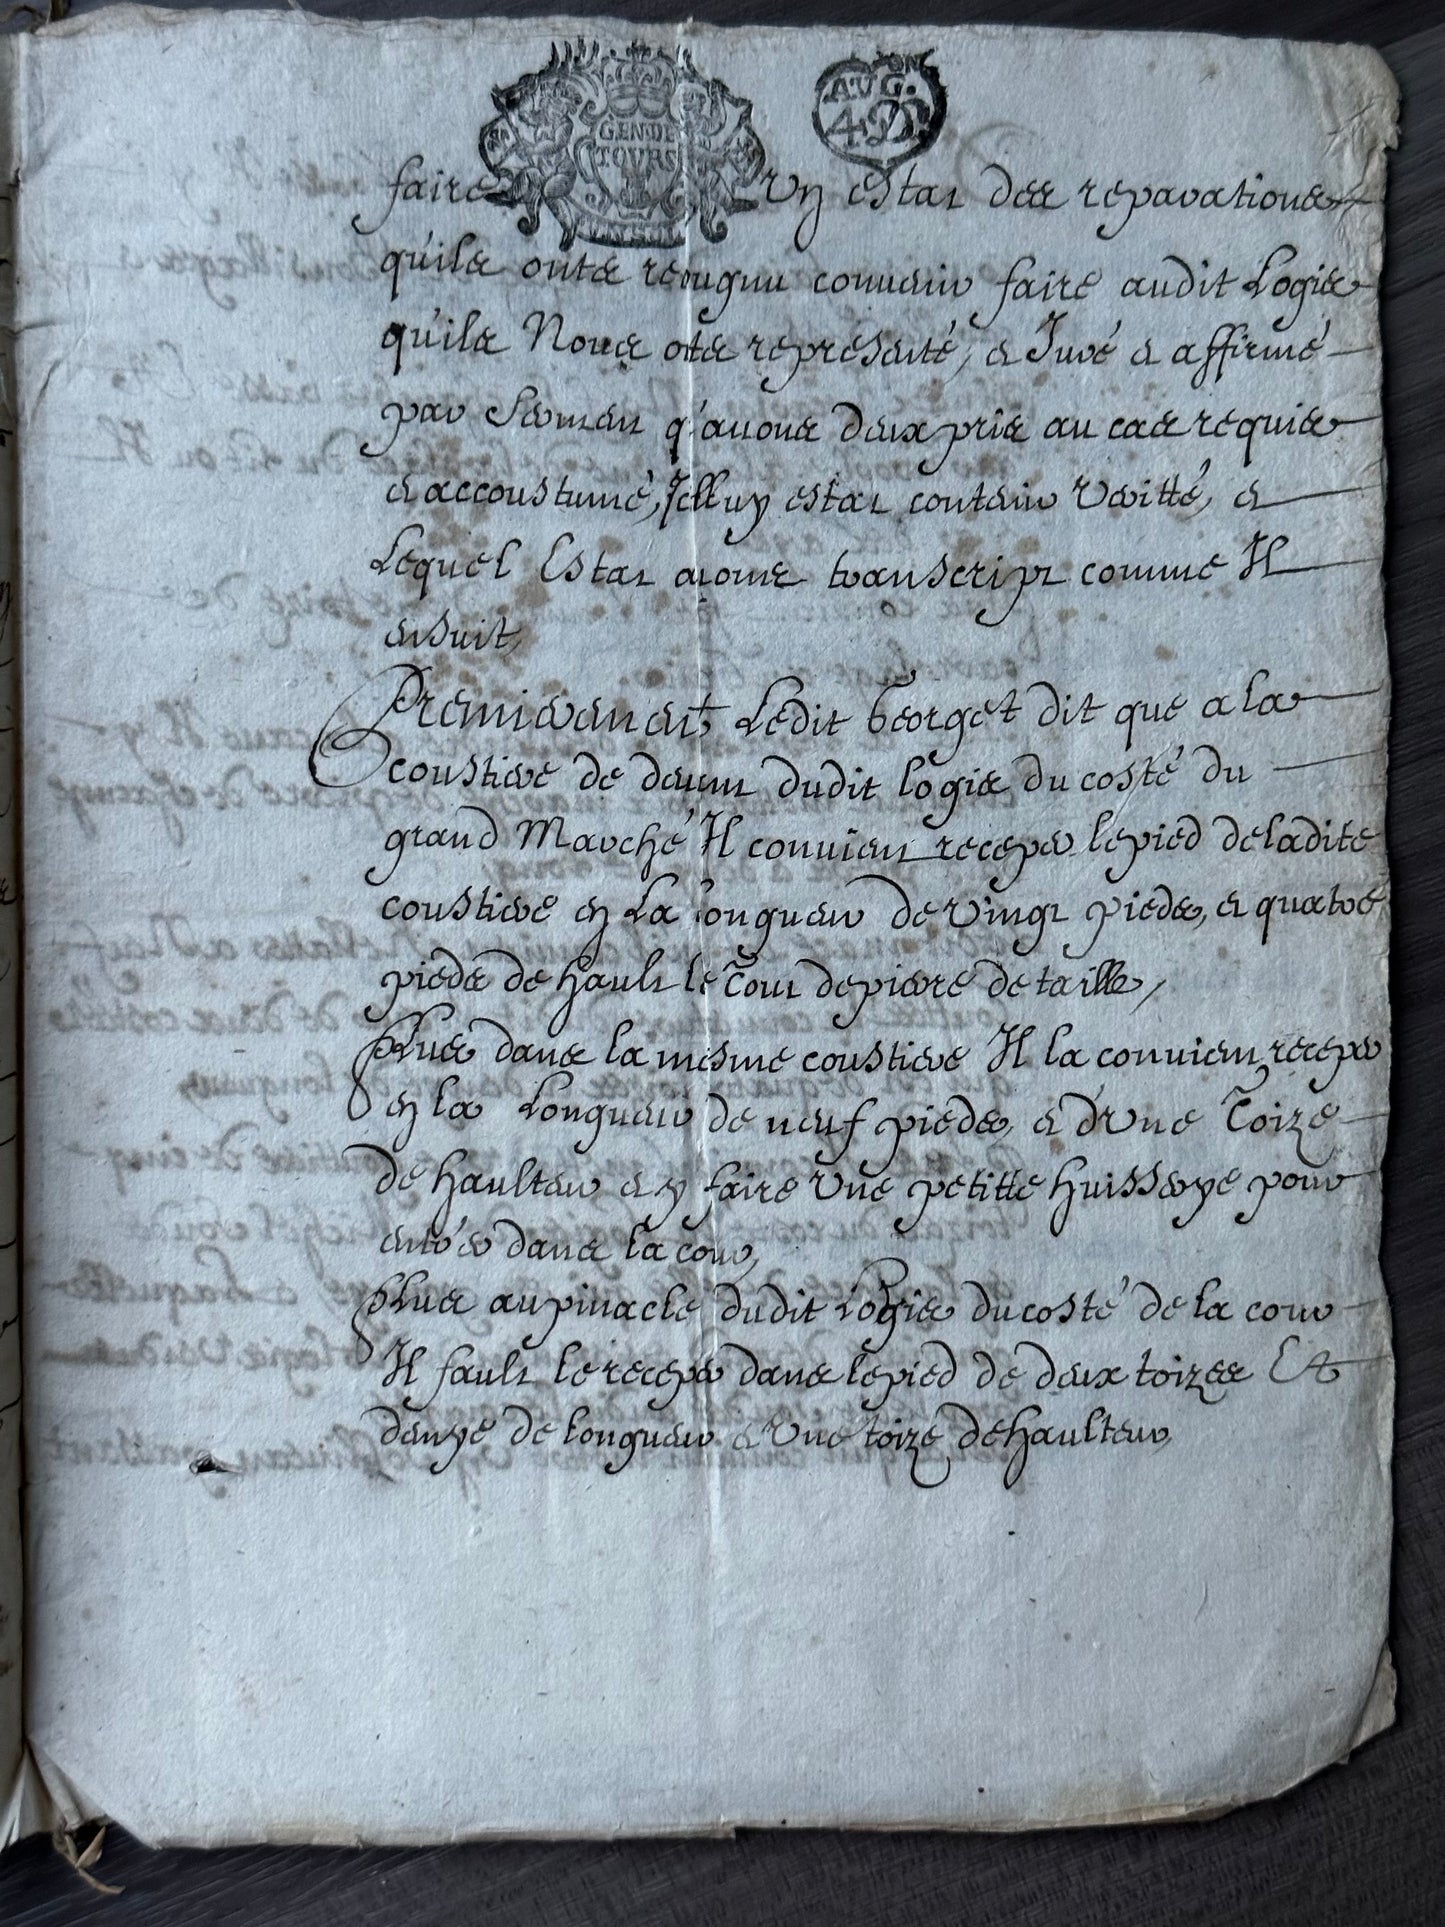 1690 French Manuscript